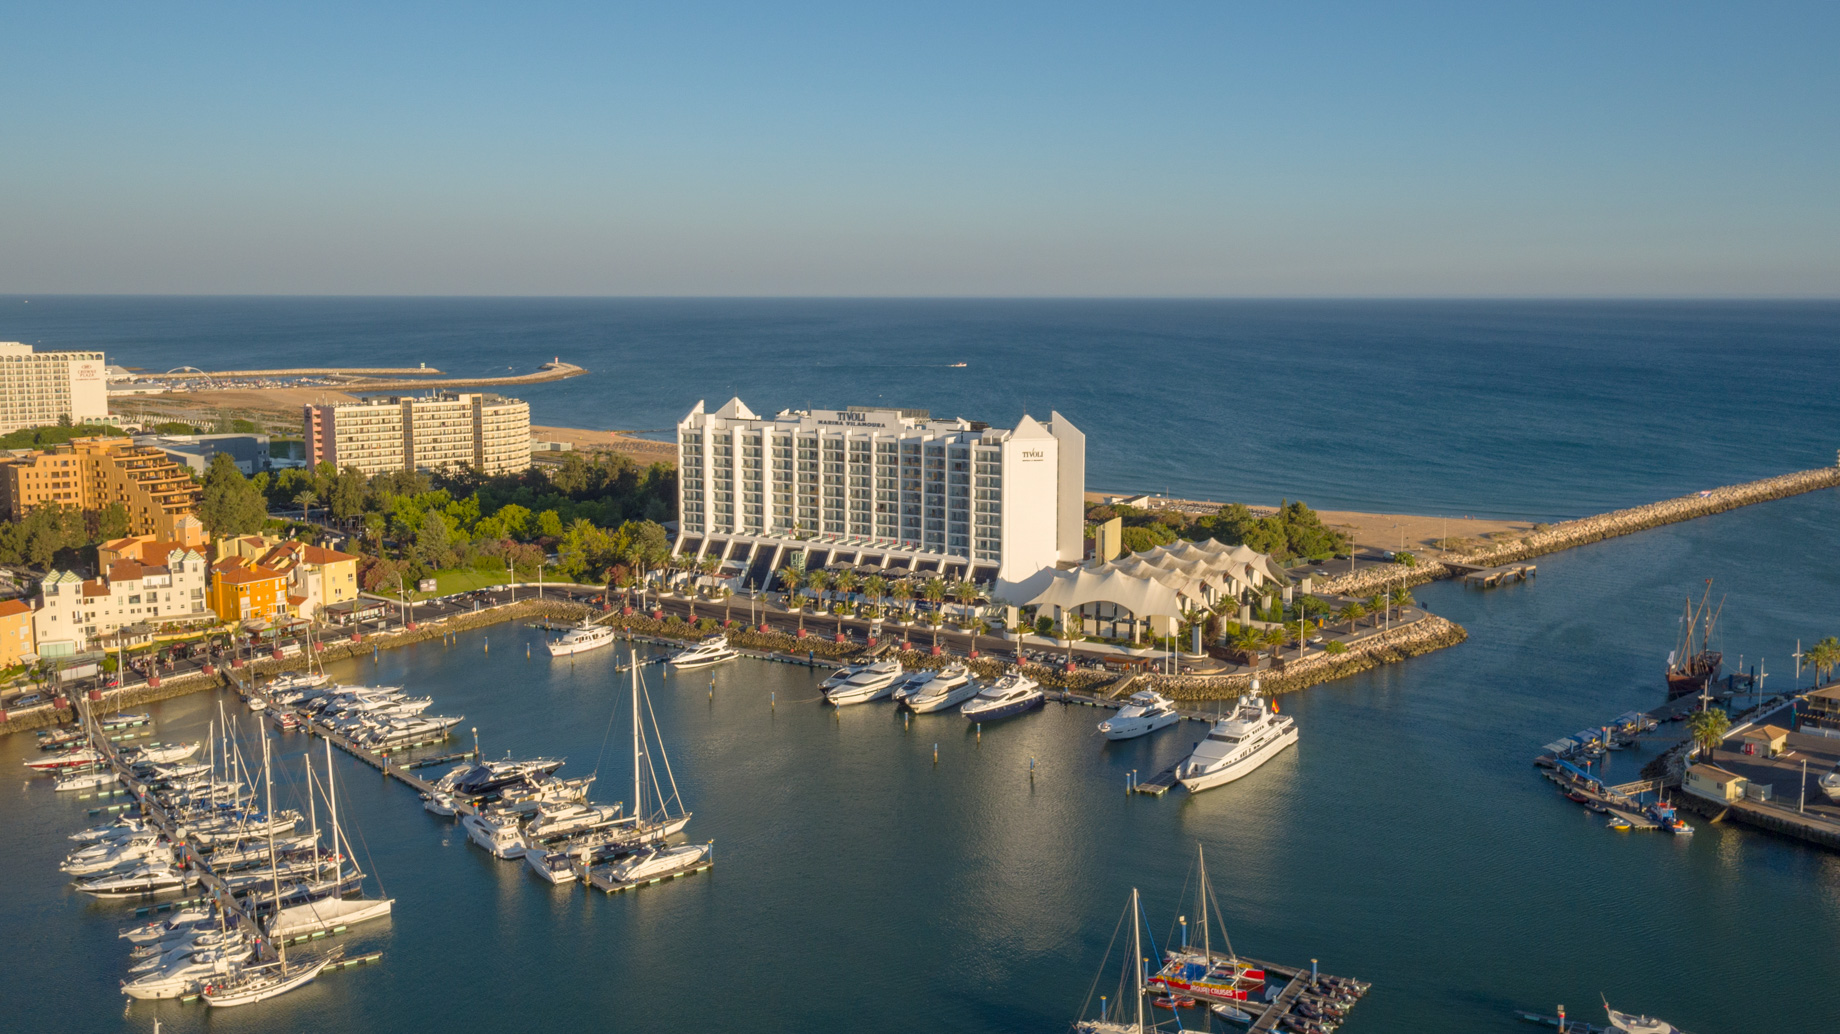 Tivoli Marina Vilamoura Algarve Resort – Portugal – Aerial View